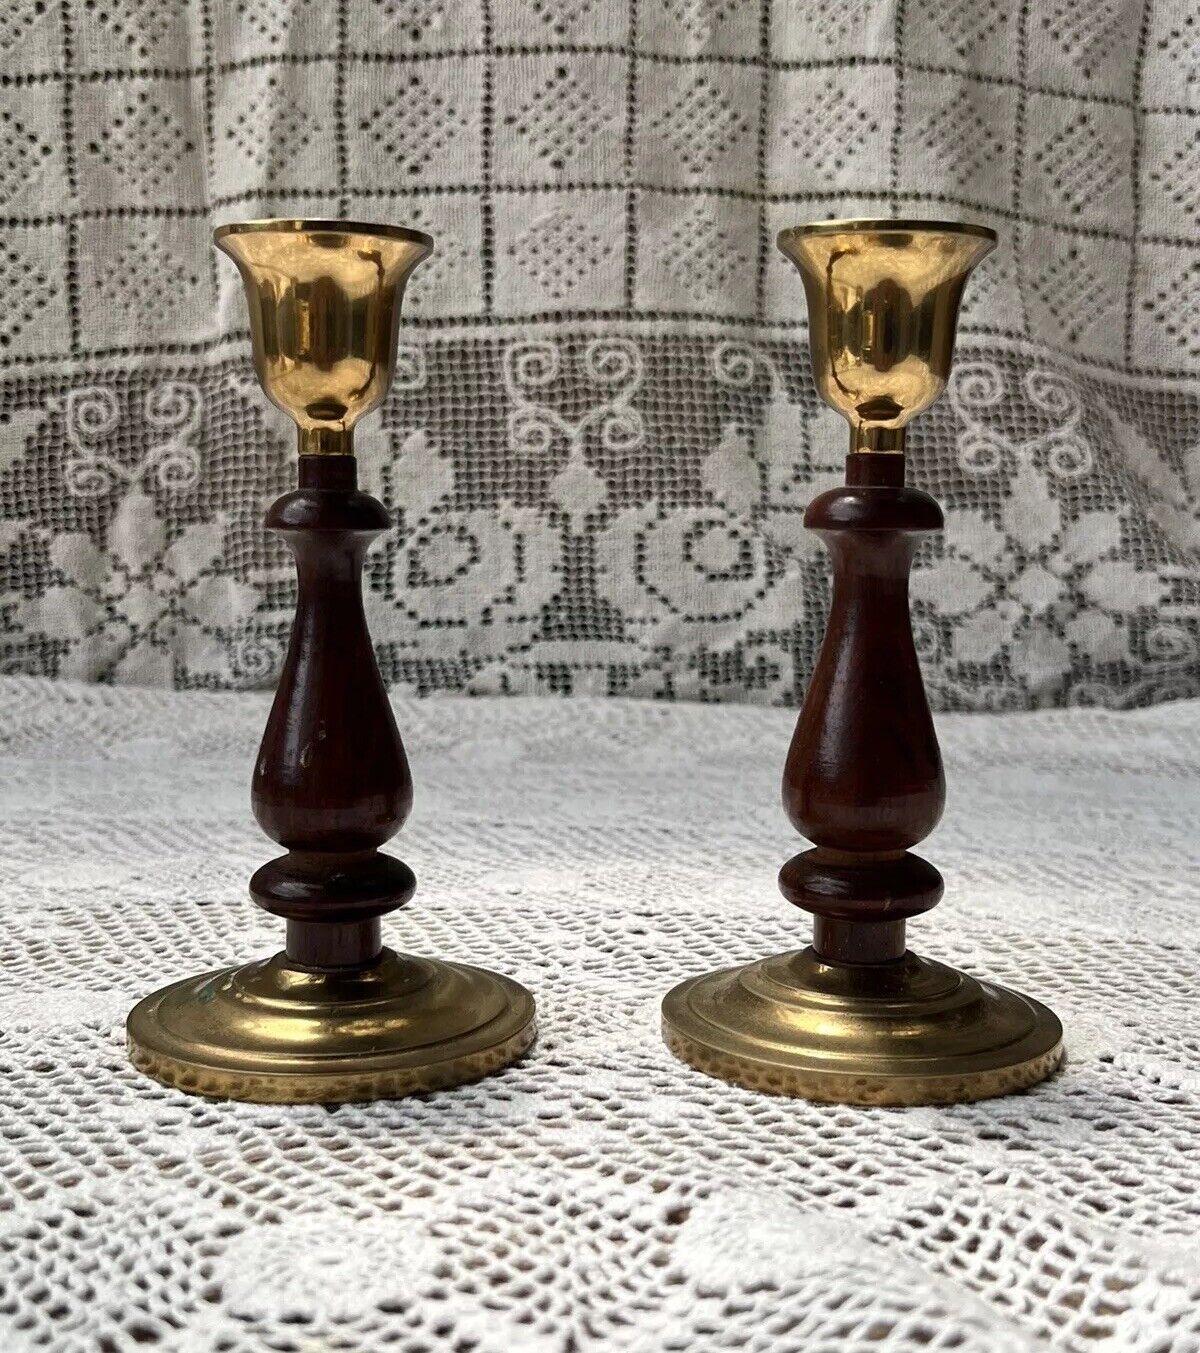 VTG Mid Century Brass & Wood Grain Ornate Deco Candlesticks Candle Holders